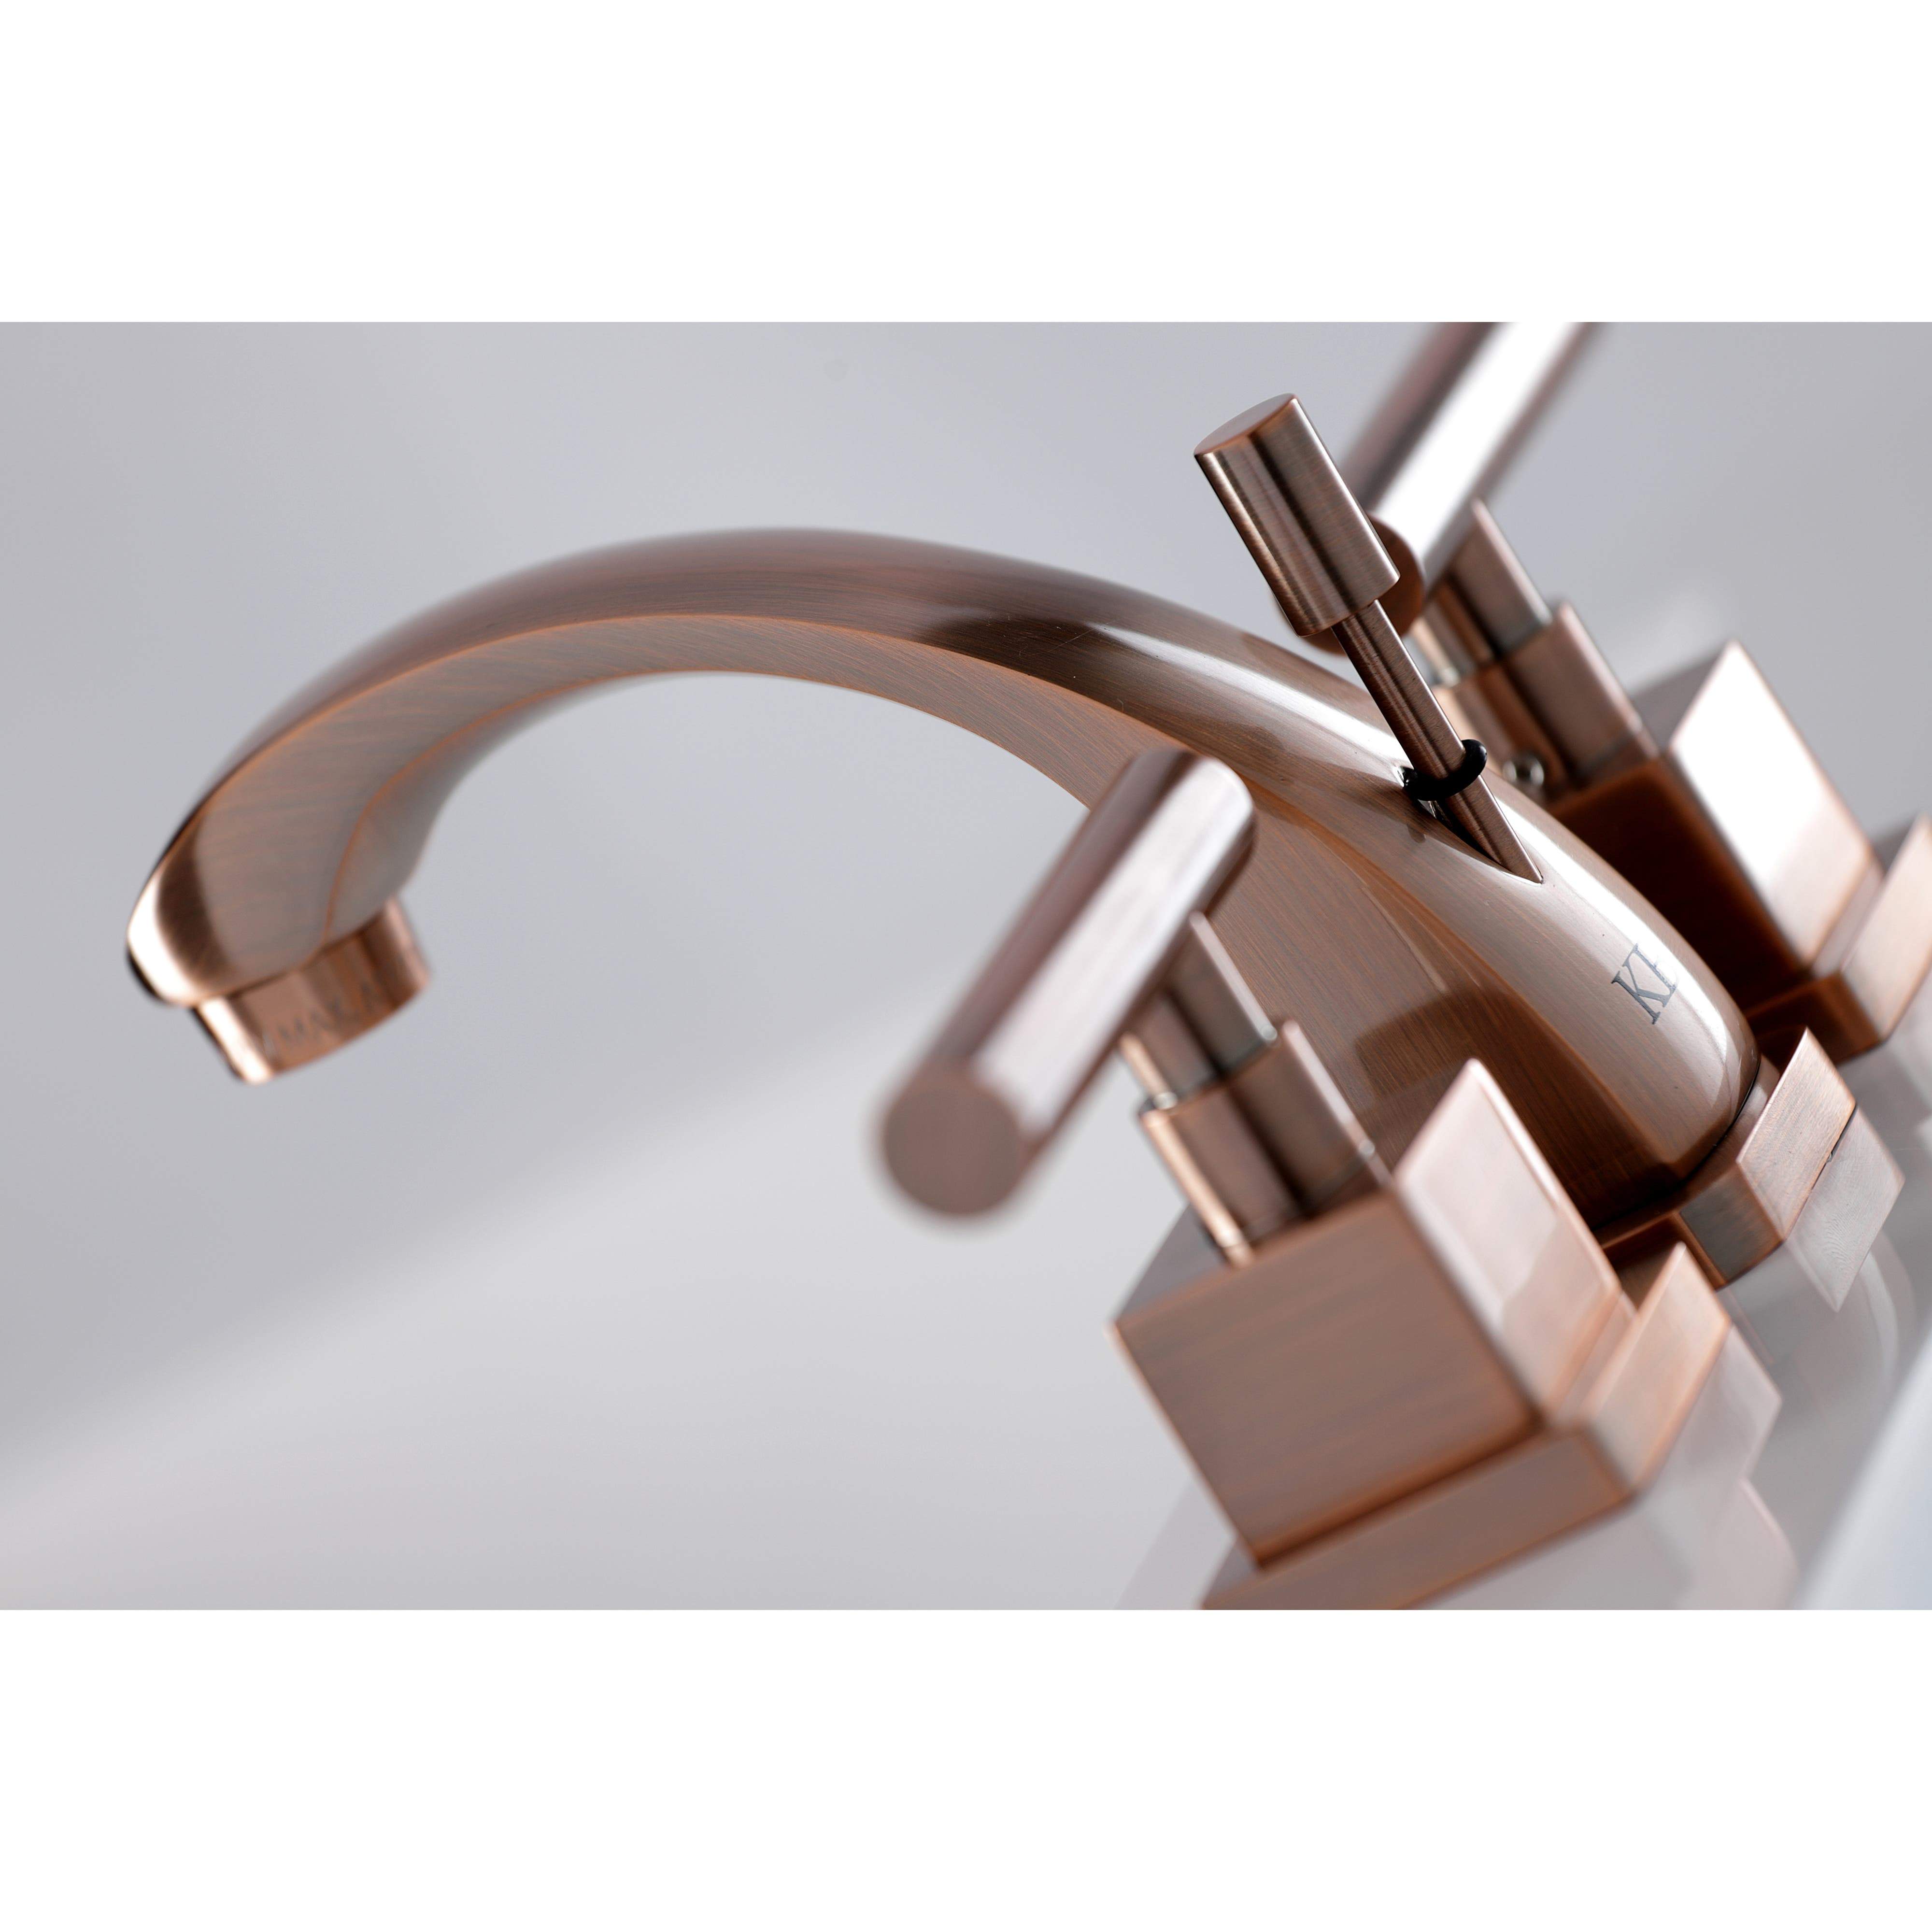 Kingston Brass KS494CQLAC Claremont 8 in. Widespread Bathroom Faucet, Antique Copper